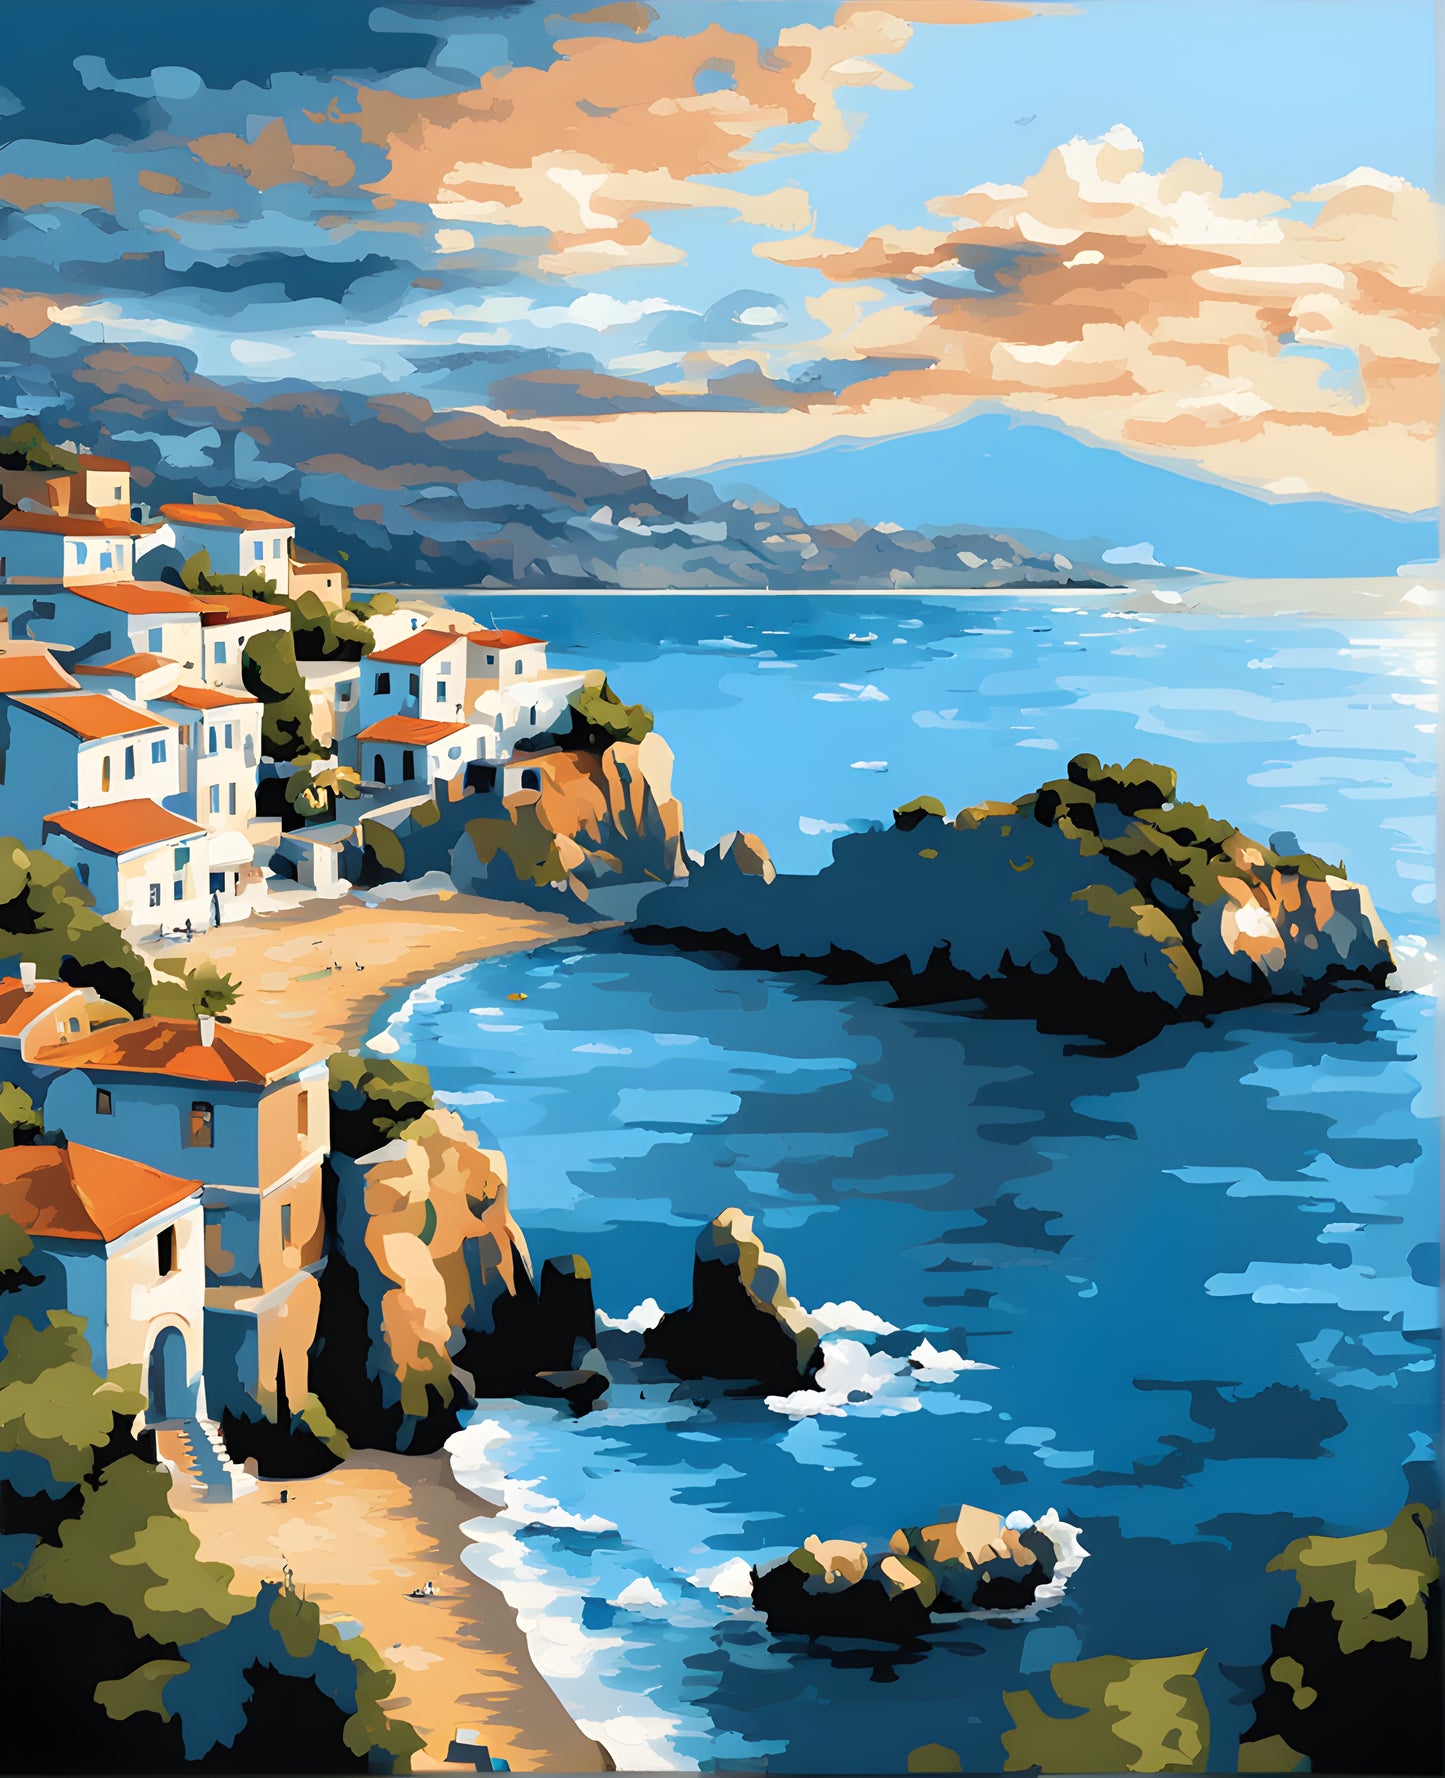 Mediterranean Sea Coastal Landscape (1) - Van-Go Paint-By-Number Kit